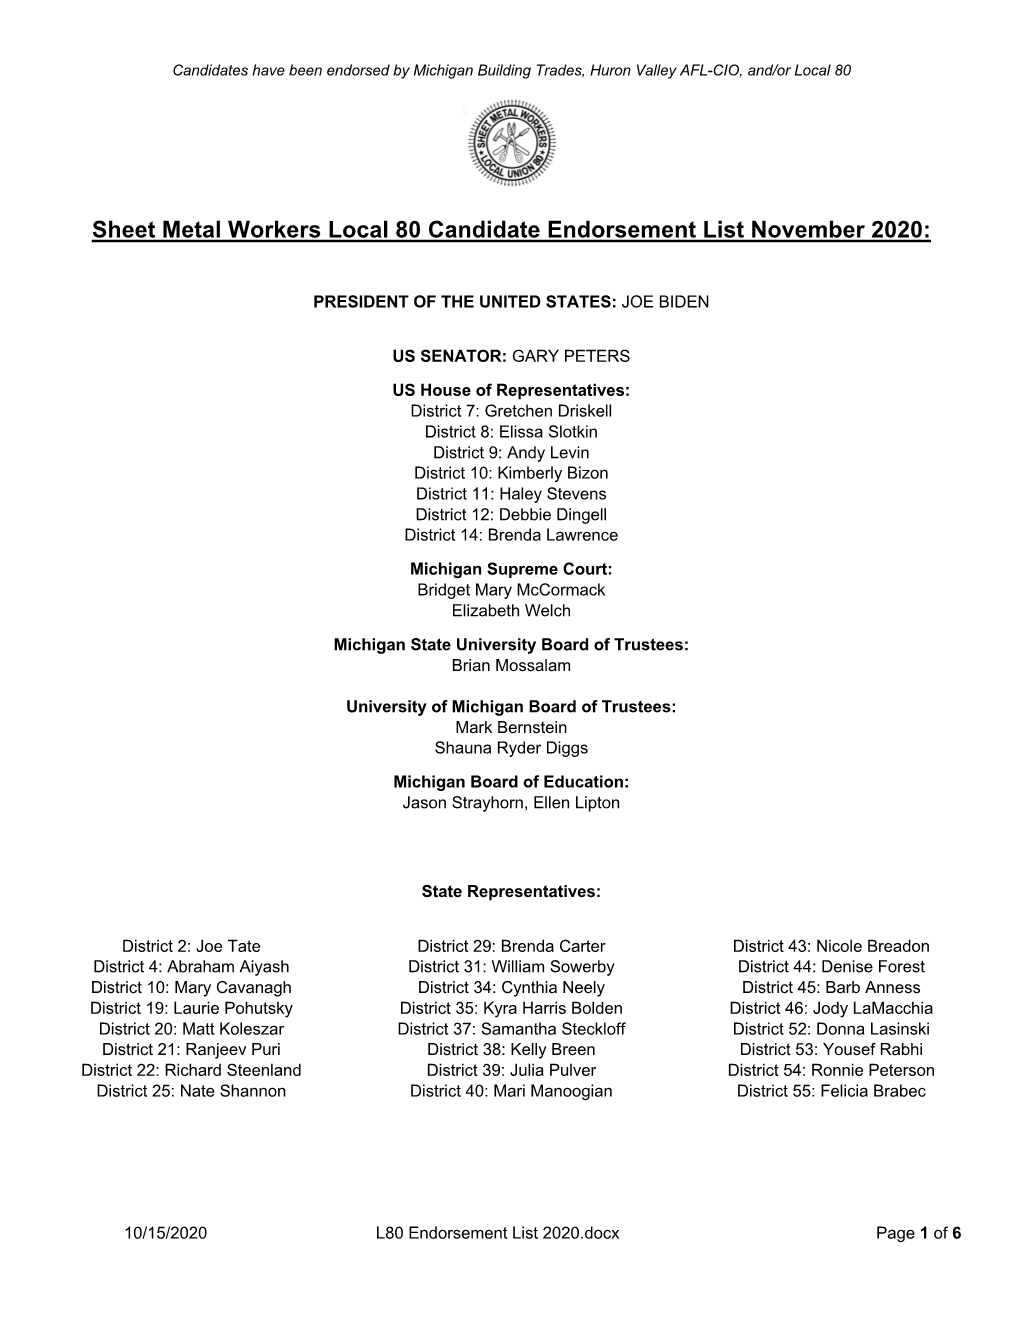 Sheet Metal Workers Local 80 Candidate Endorsement List November 2020